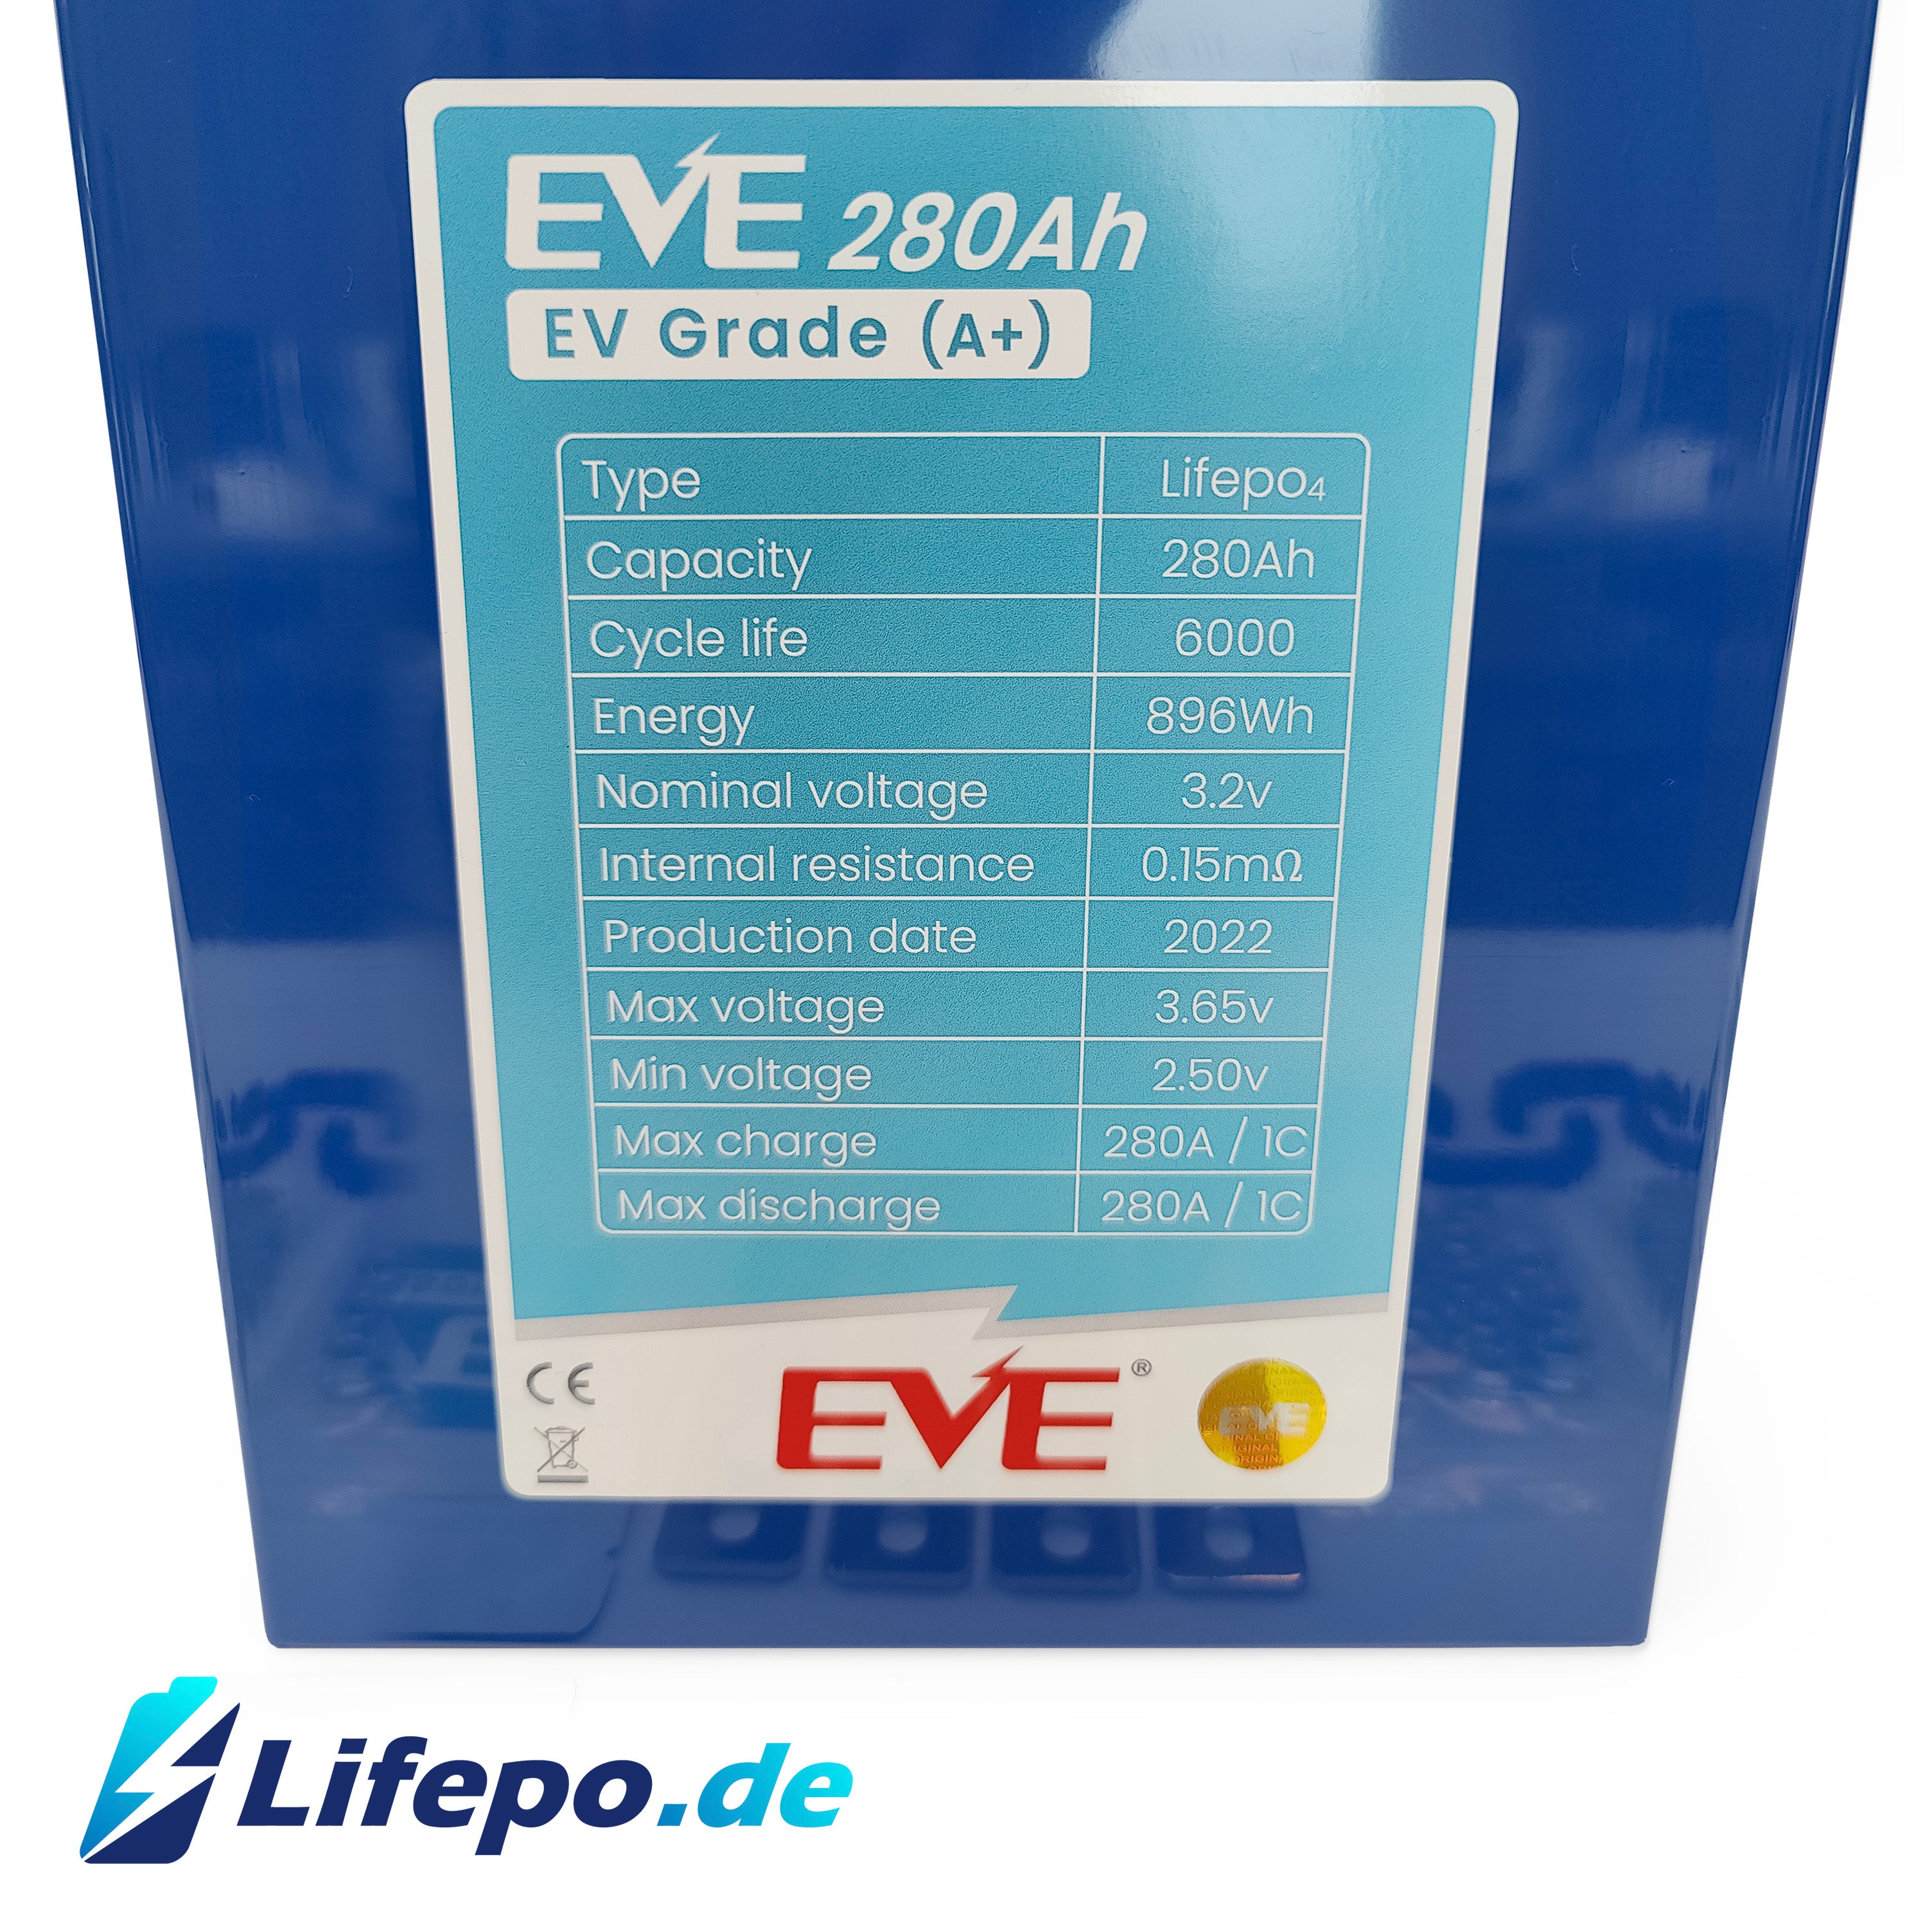 12v 560Ah - EVE - EV Grade (A+) - 7168Wh - 6000 cycles - Lifepo4 cells